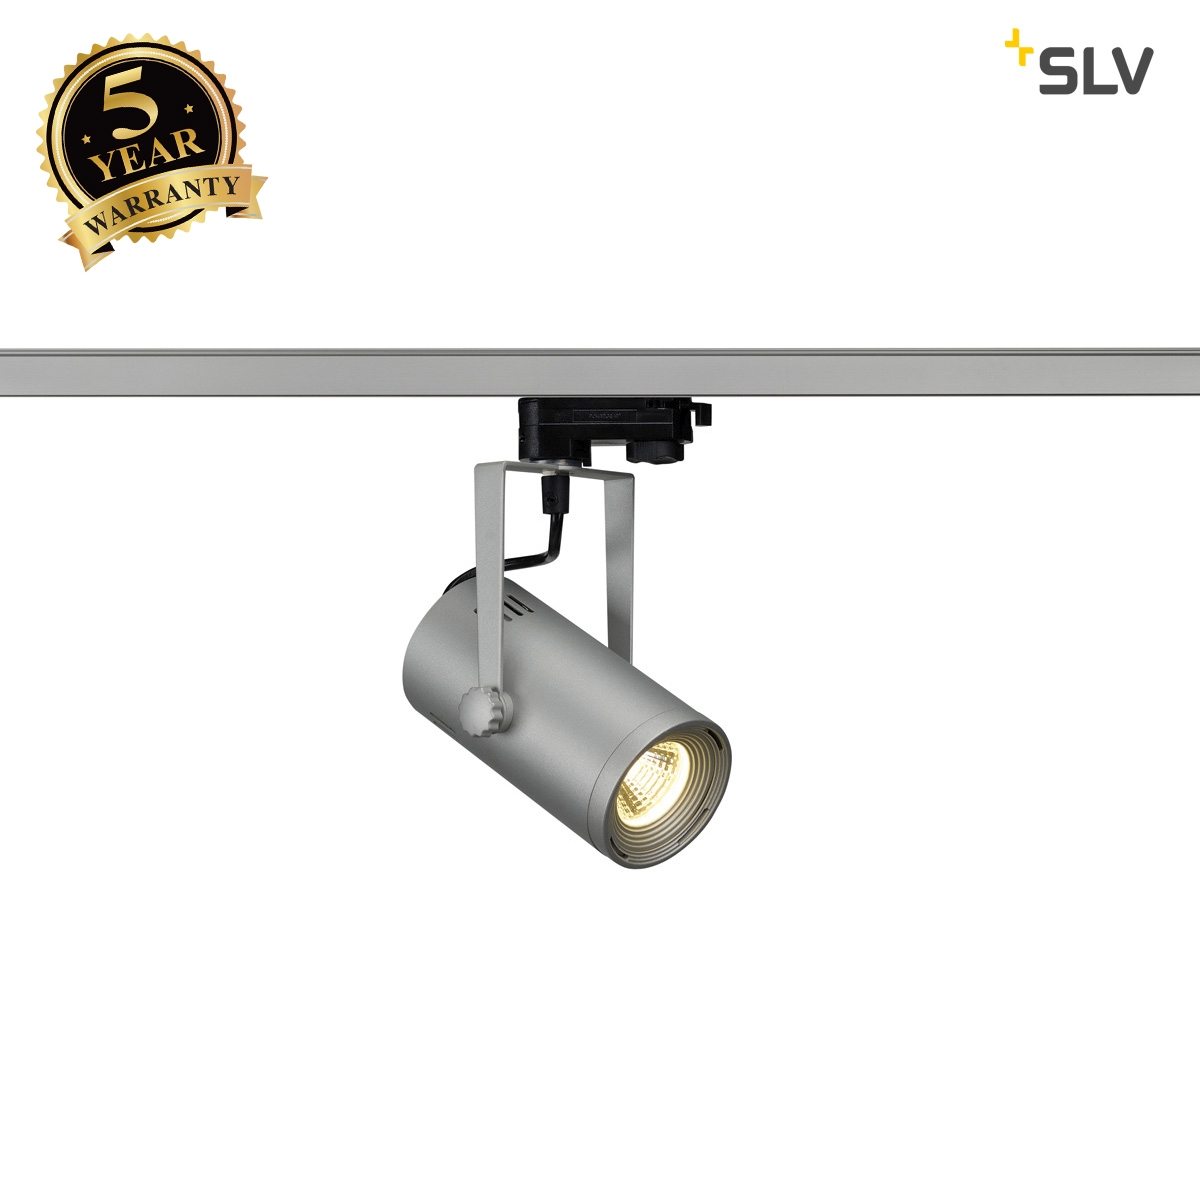 SLV EURO SPOT LED, small, 9W COB LED, silver-grey, 36, 3000K, incl. 3-circuit adapter 1001369